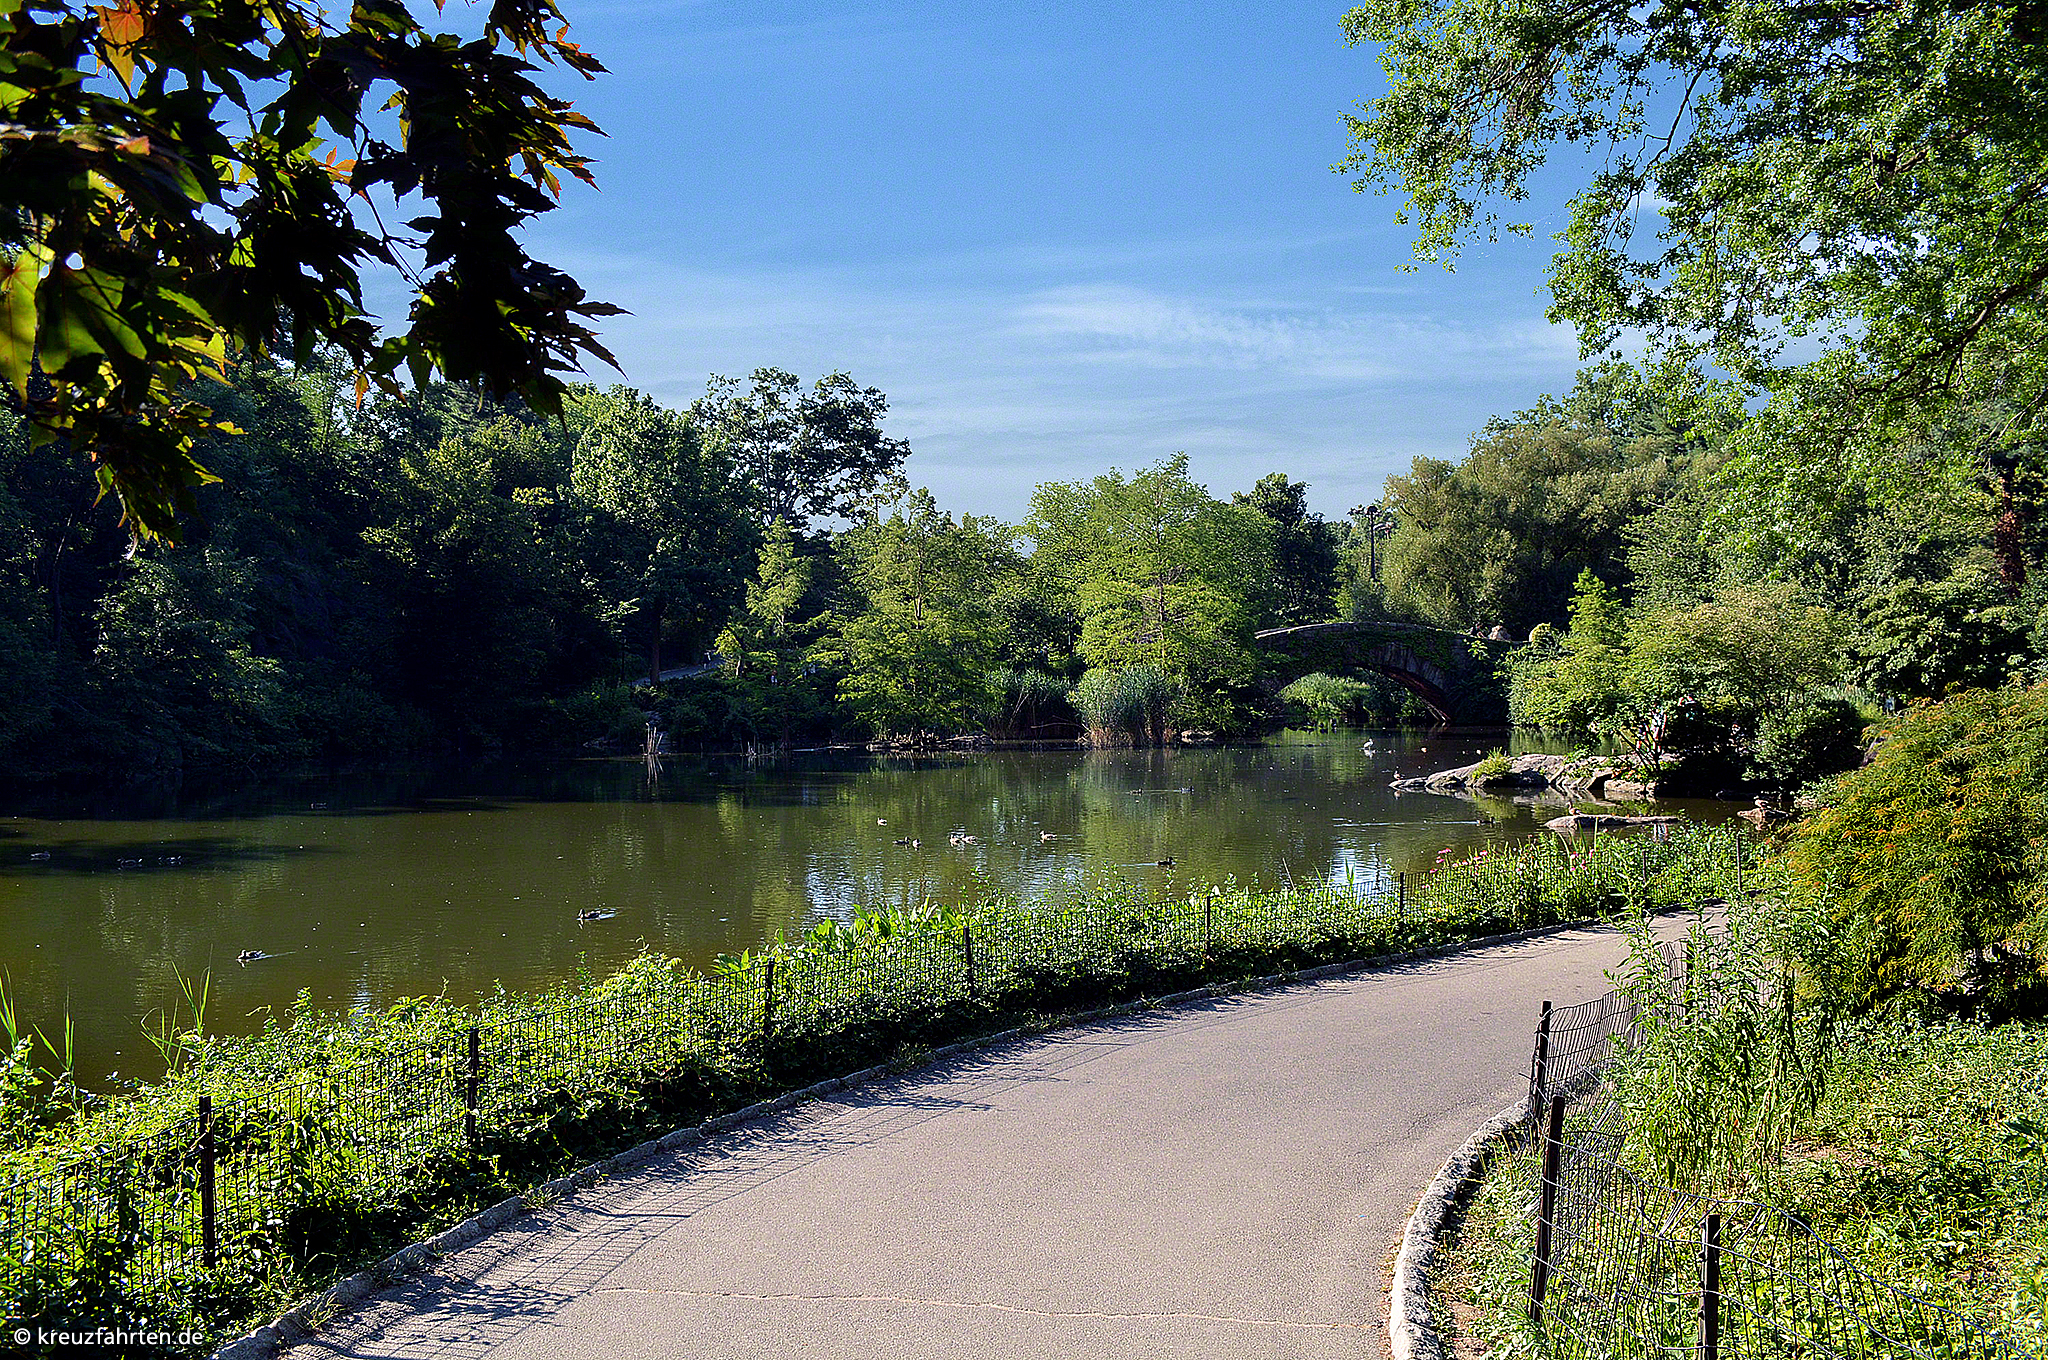 Central Park (New York)